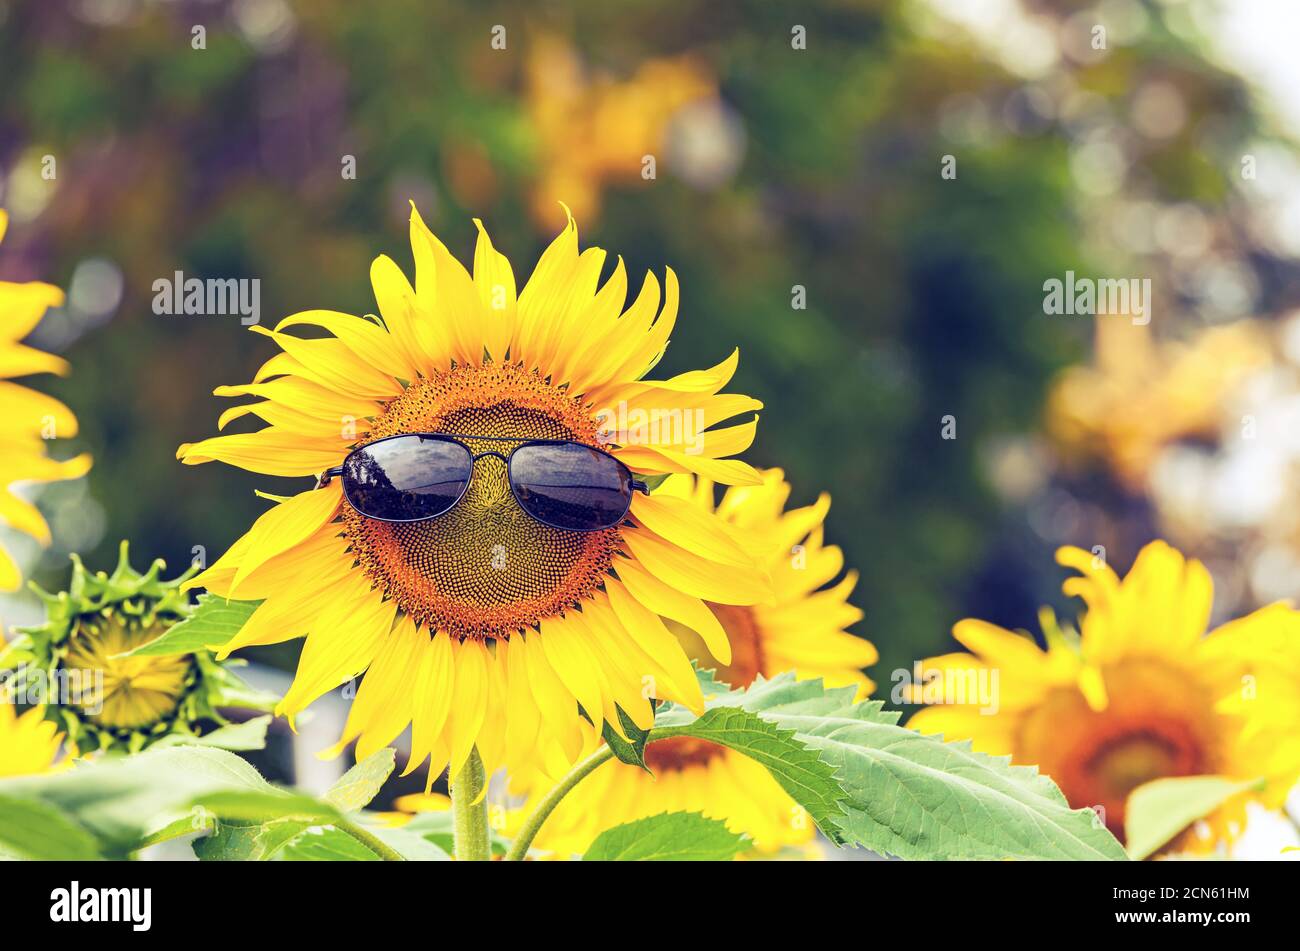 Sunflower wearing black sunglasses on natural light Stock Photo